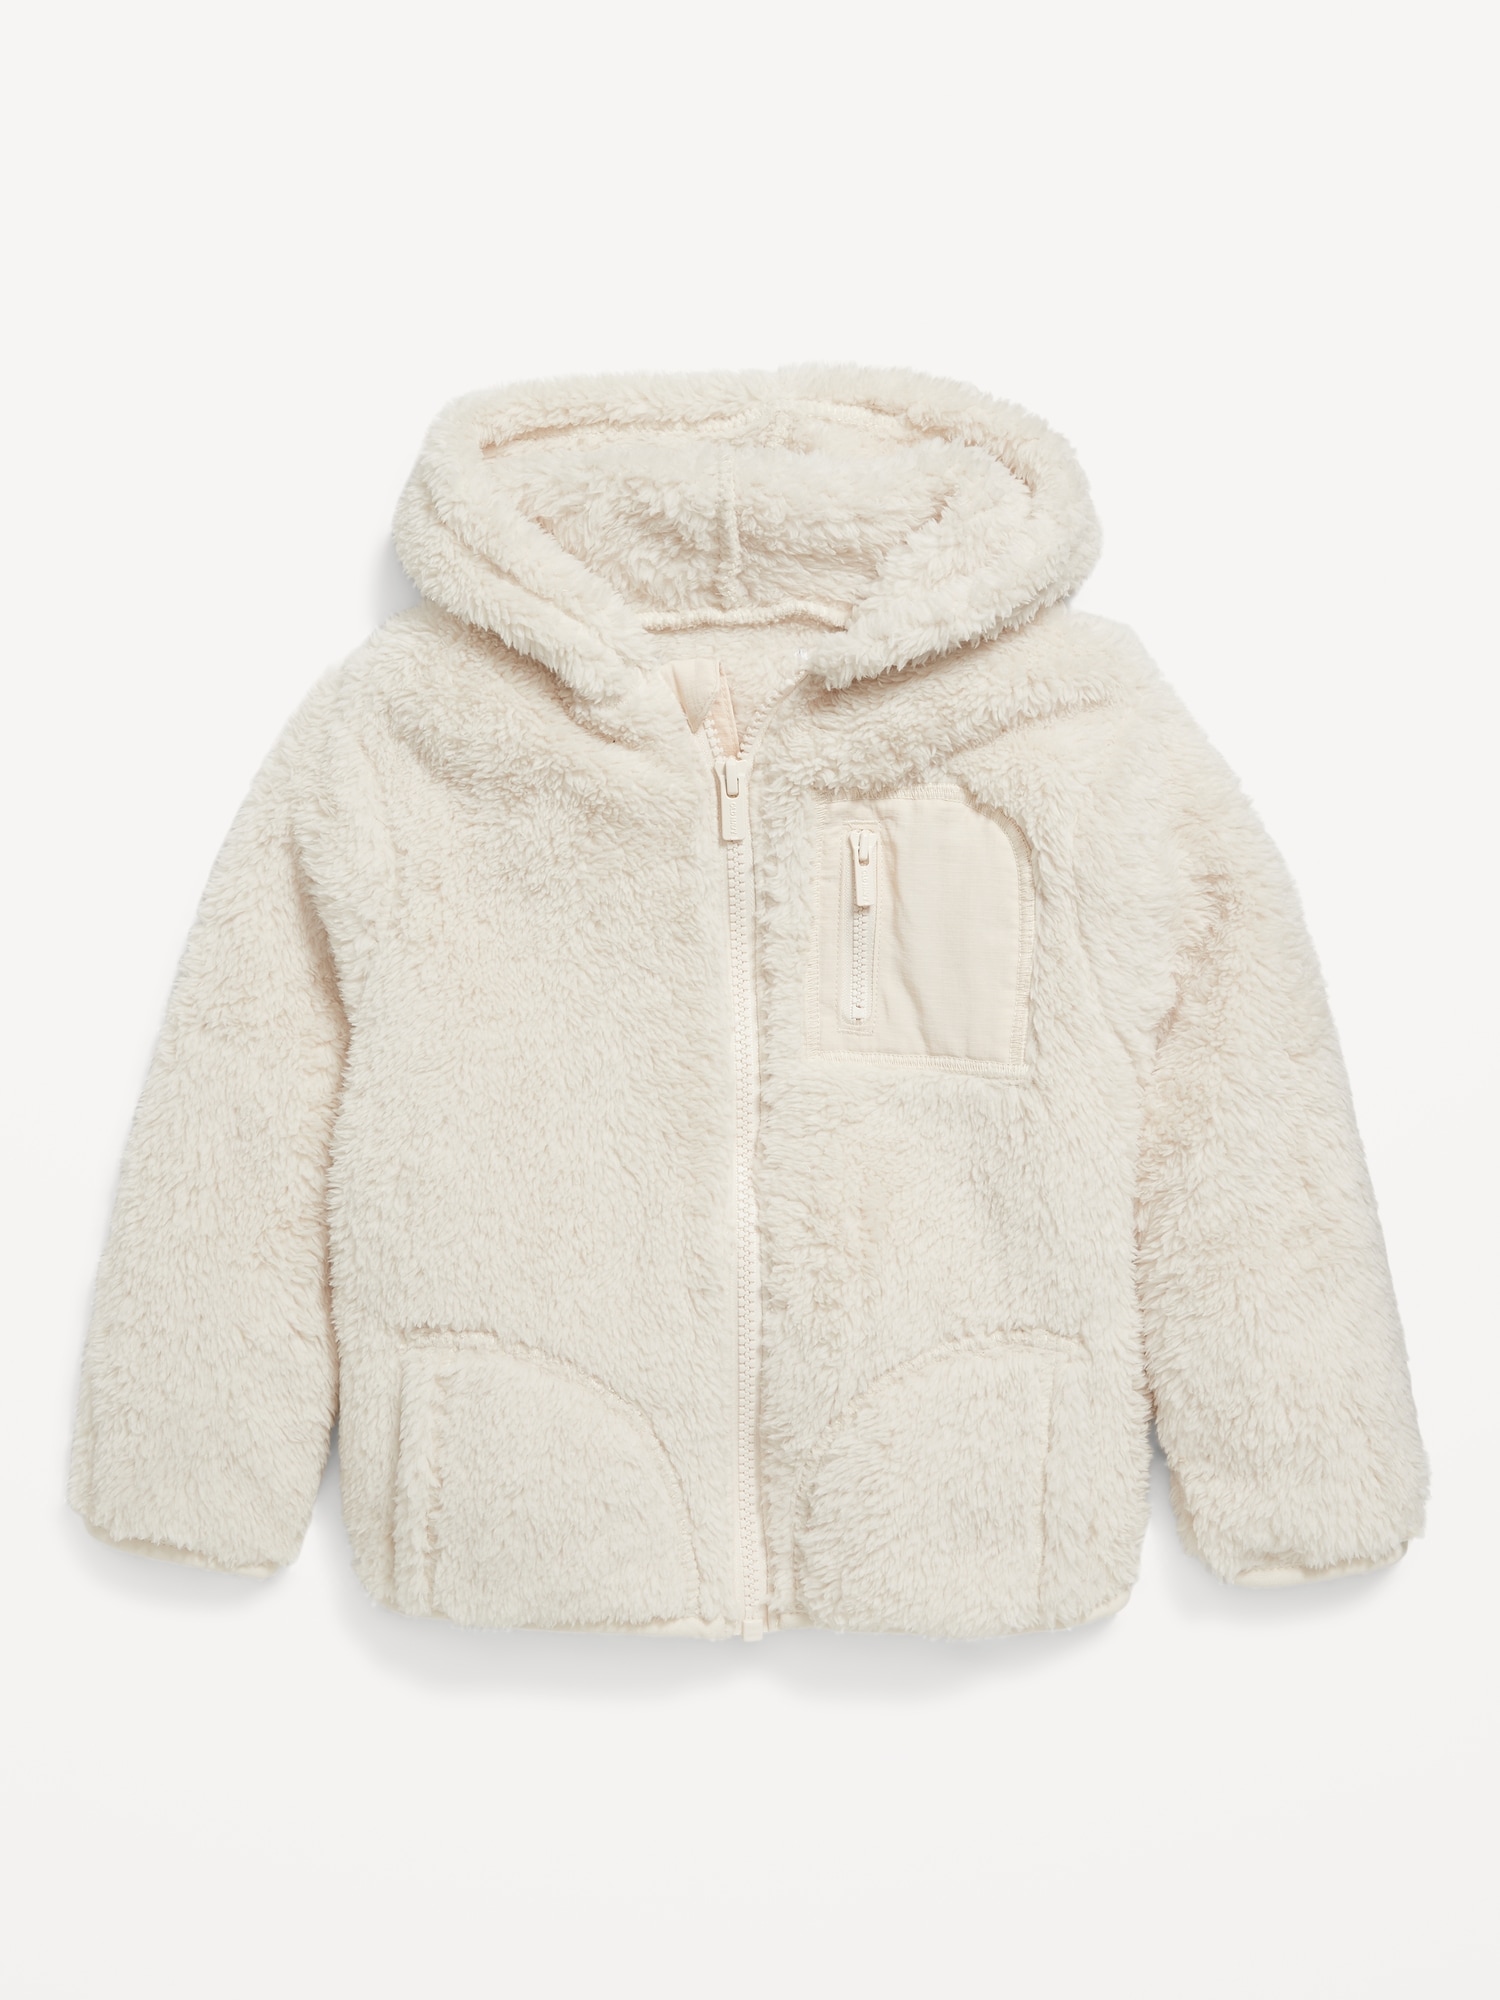 Unisex Sherpa Zip-Front Pocket Hooded Jacket for Toddler